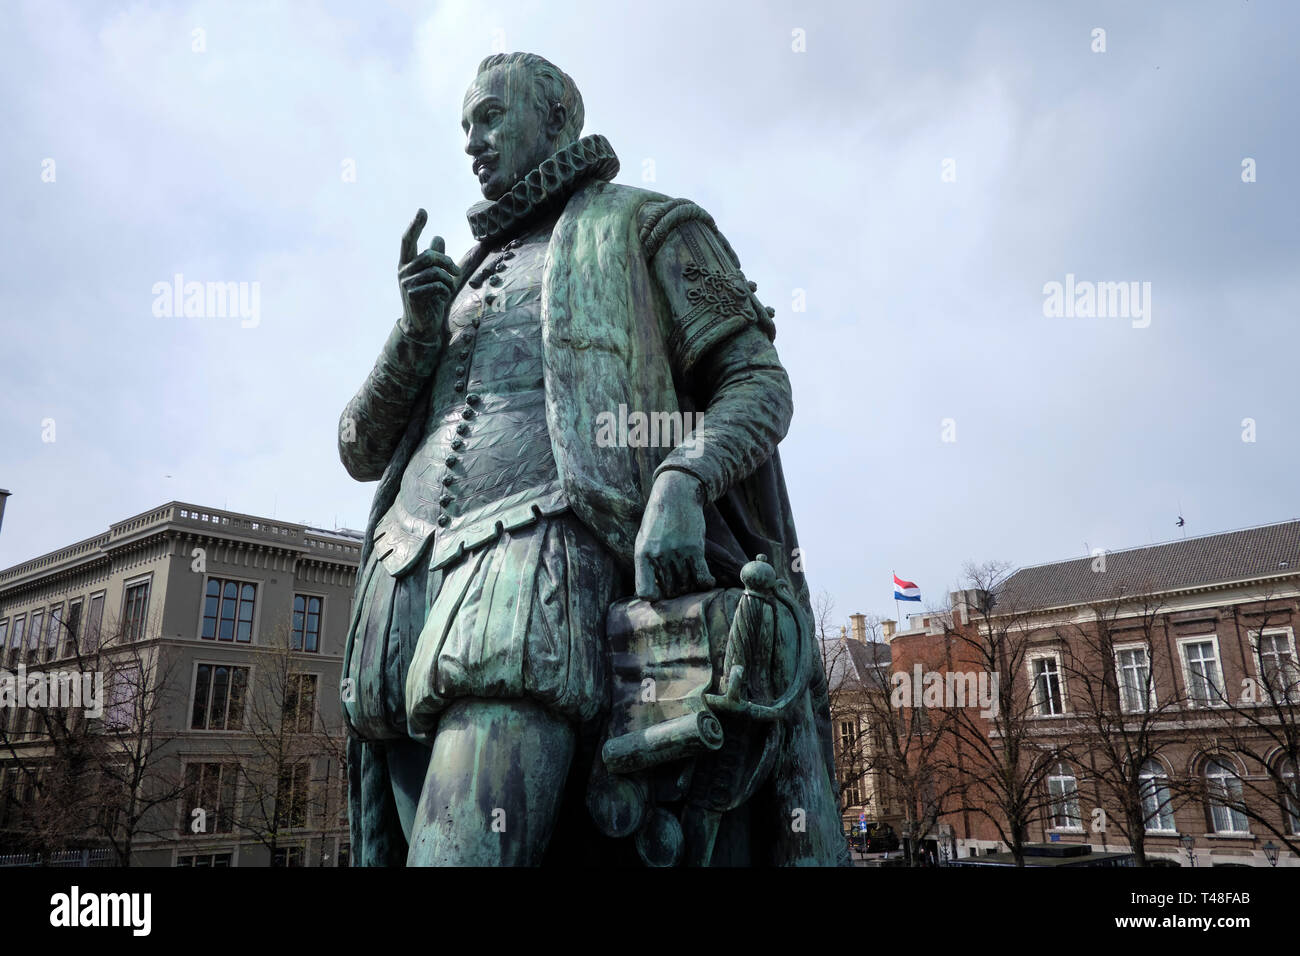 Statue of William of Orange, William I, Prince of Orange on Het Plein, (The Square) in the center of The Hague, Netherlands Stock Photo